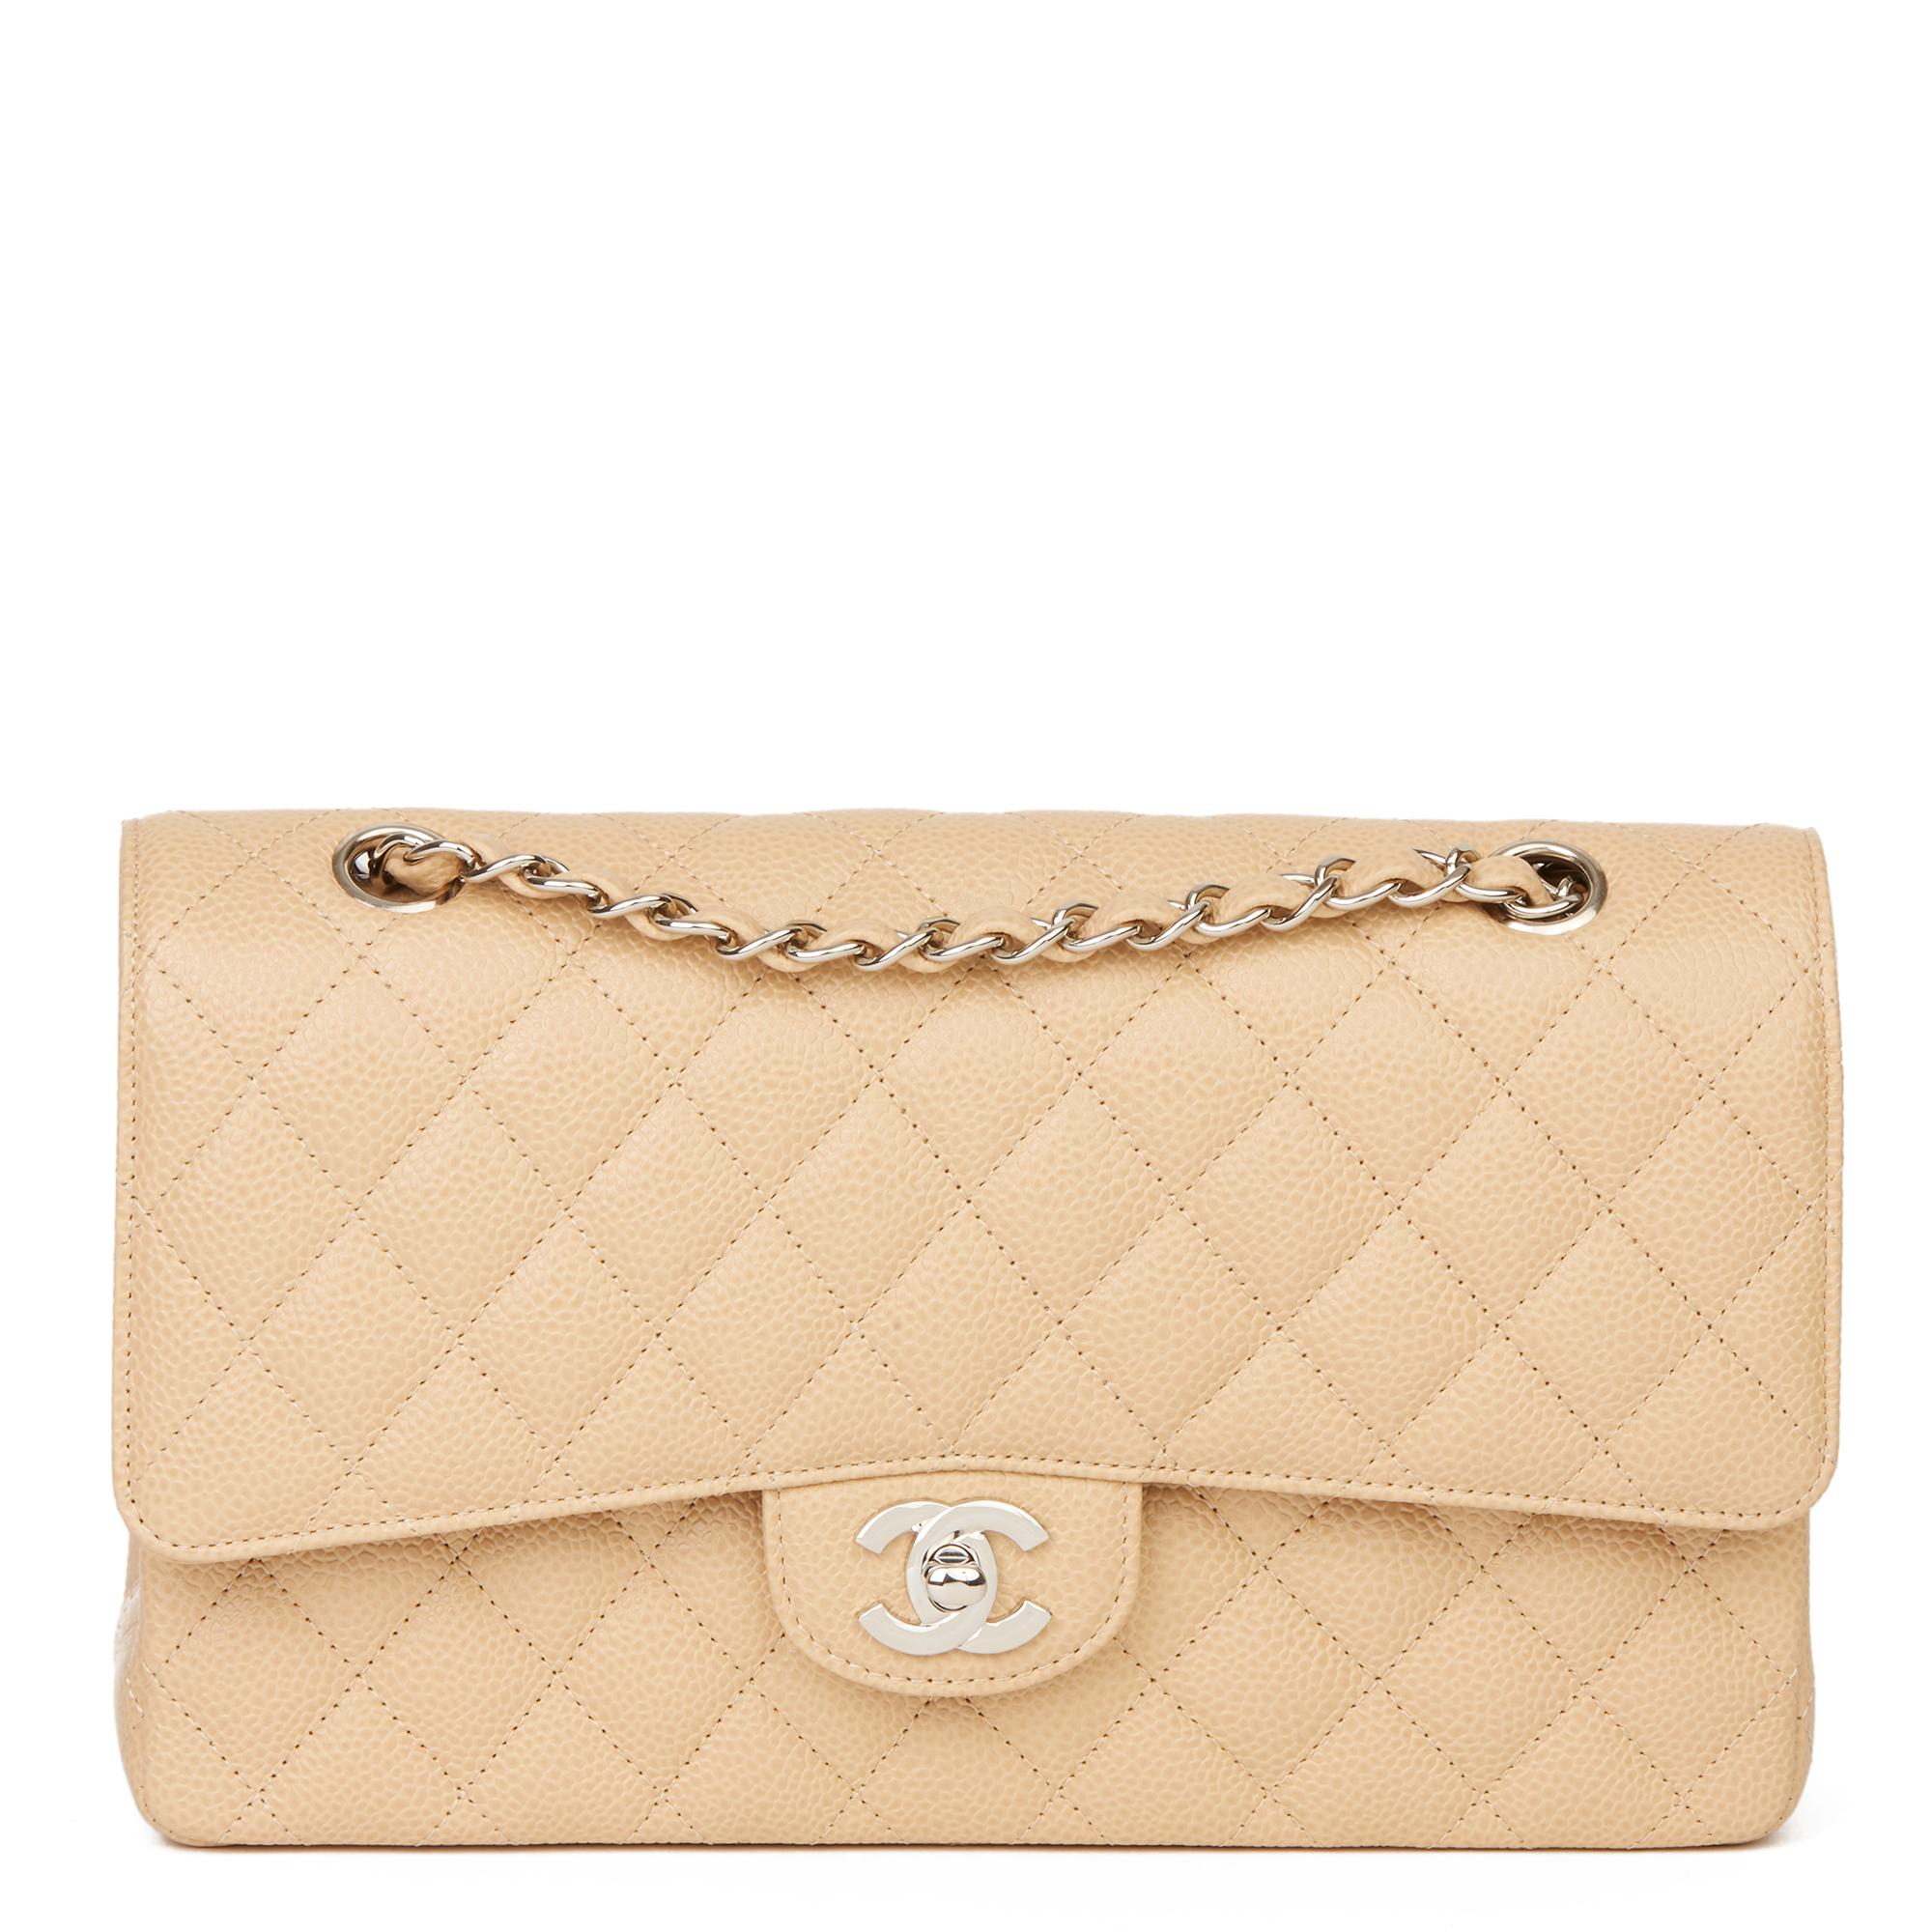 Chanel Bag 2018 - 6 For Sale on 1stDibs